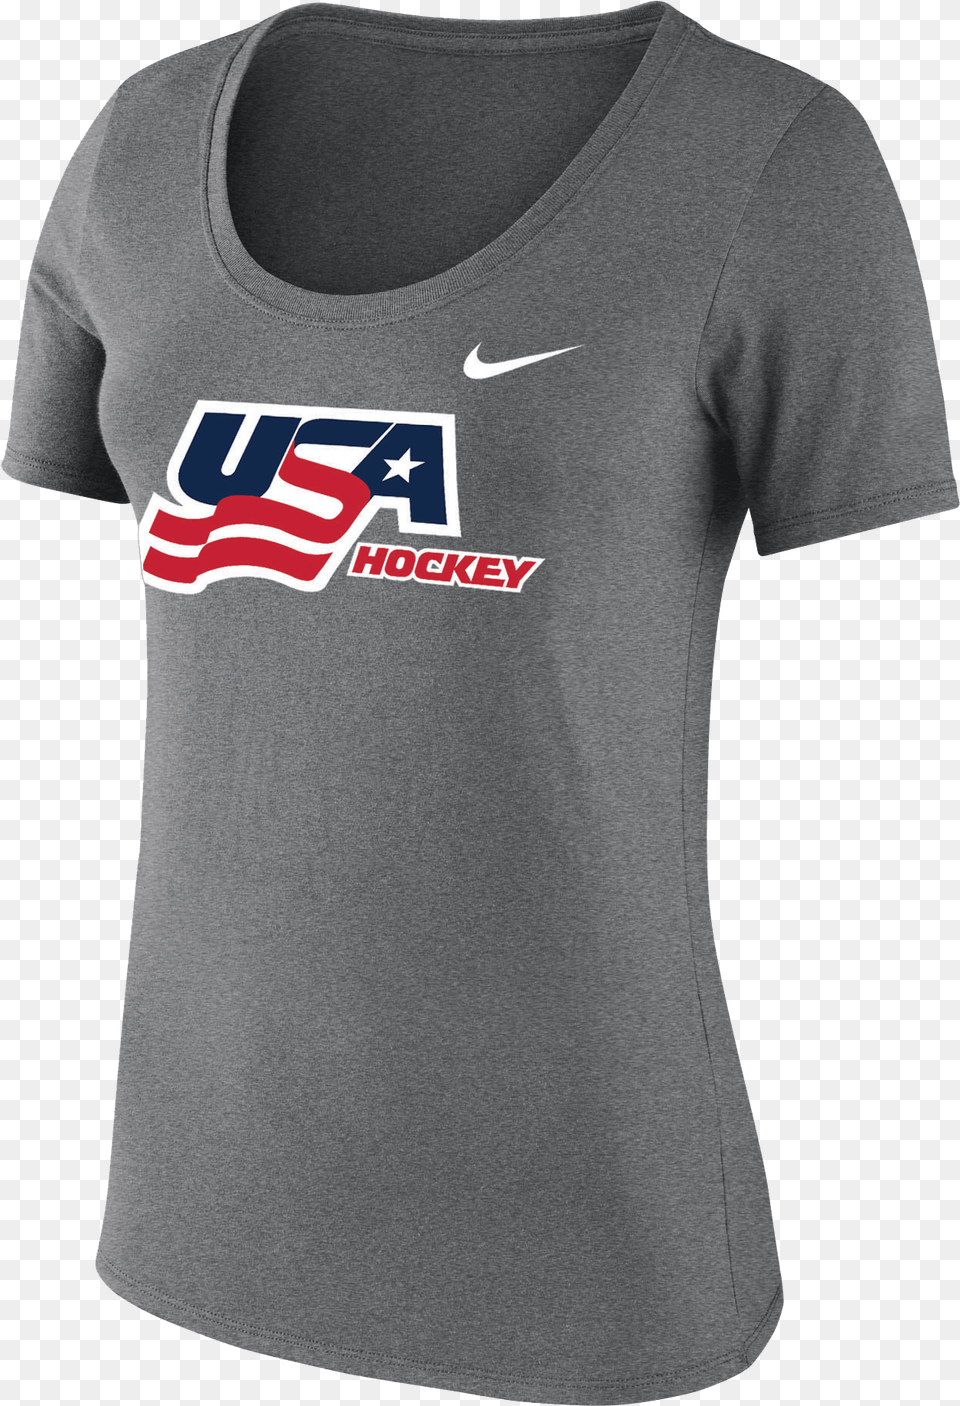 Usa Hockey Nike Cotton Womens Tee Nike Dri Fit Nike Usa Hockey, Clothing, Shirt, T-shirt Free Png Download